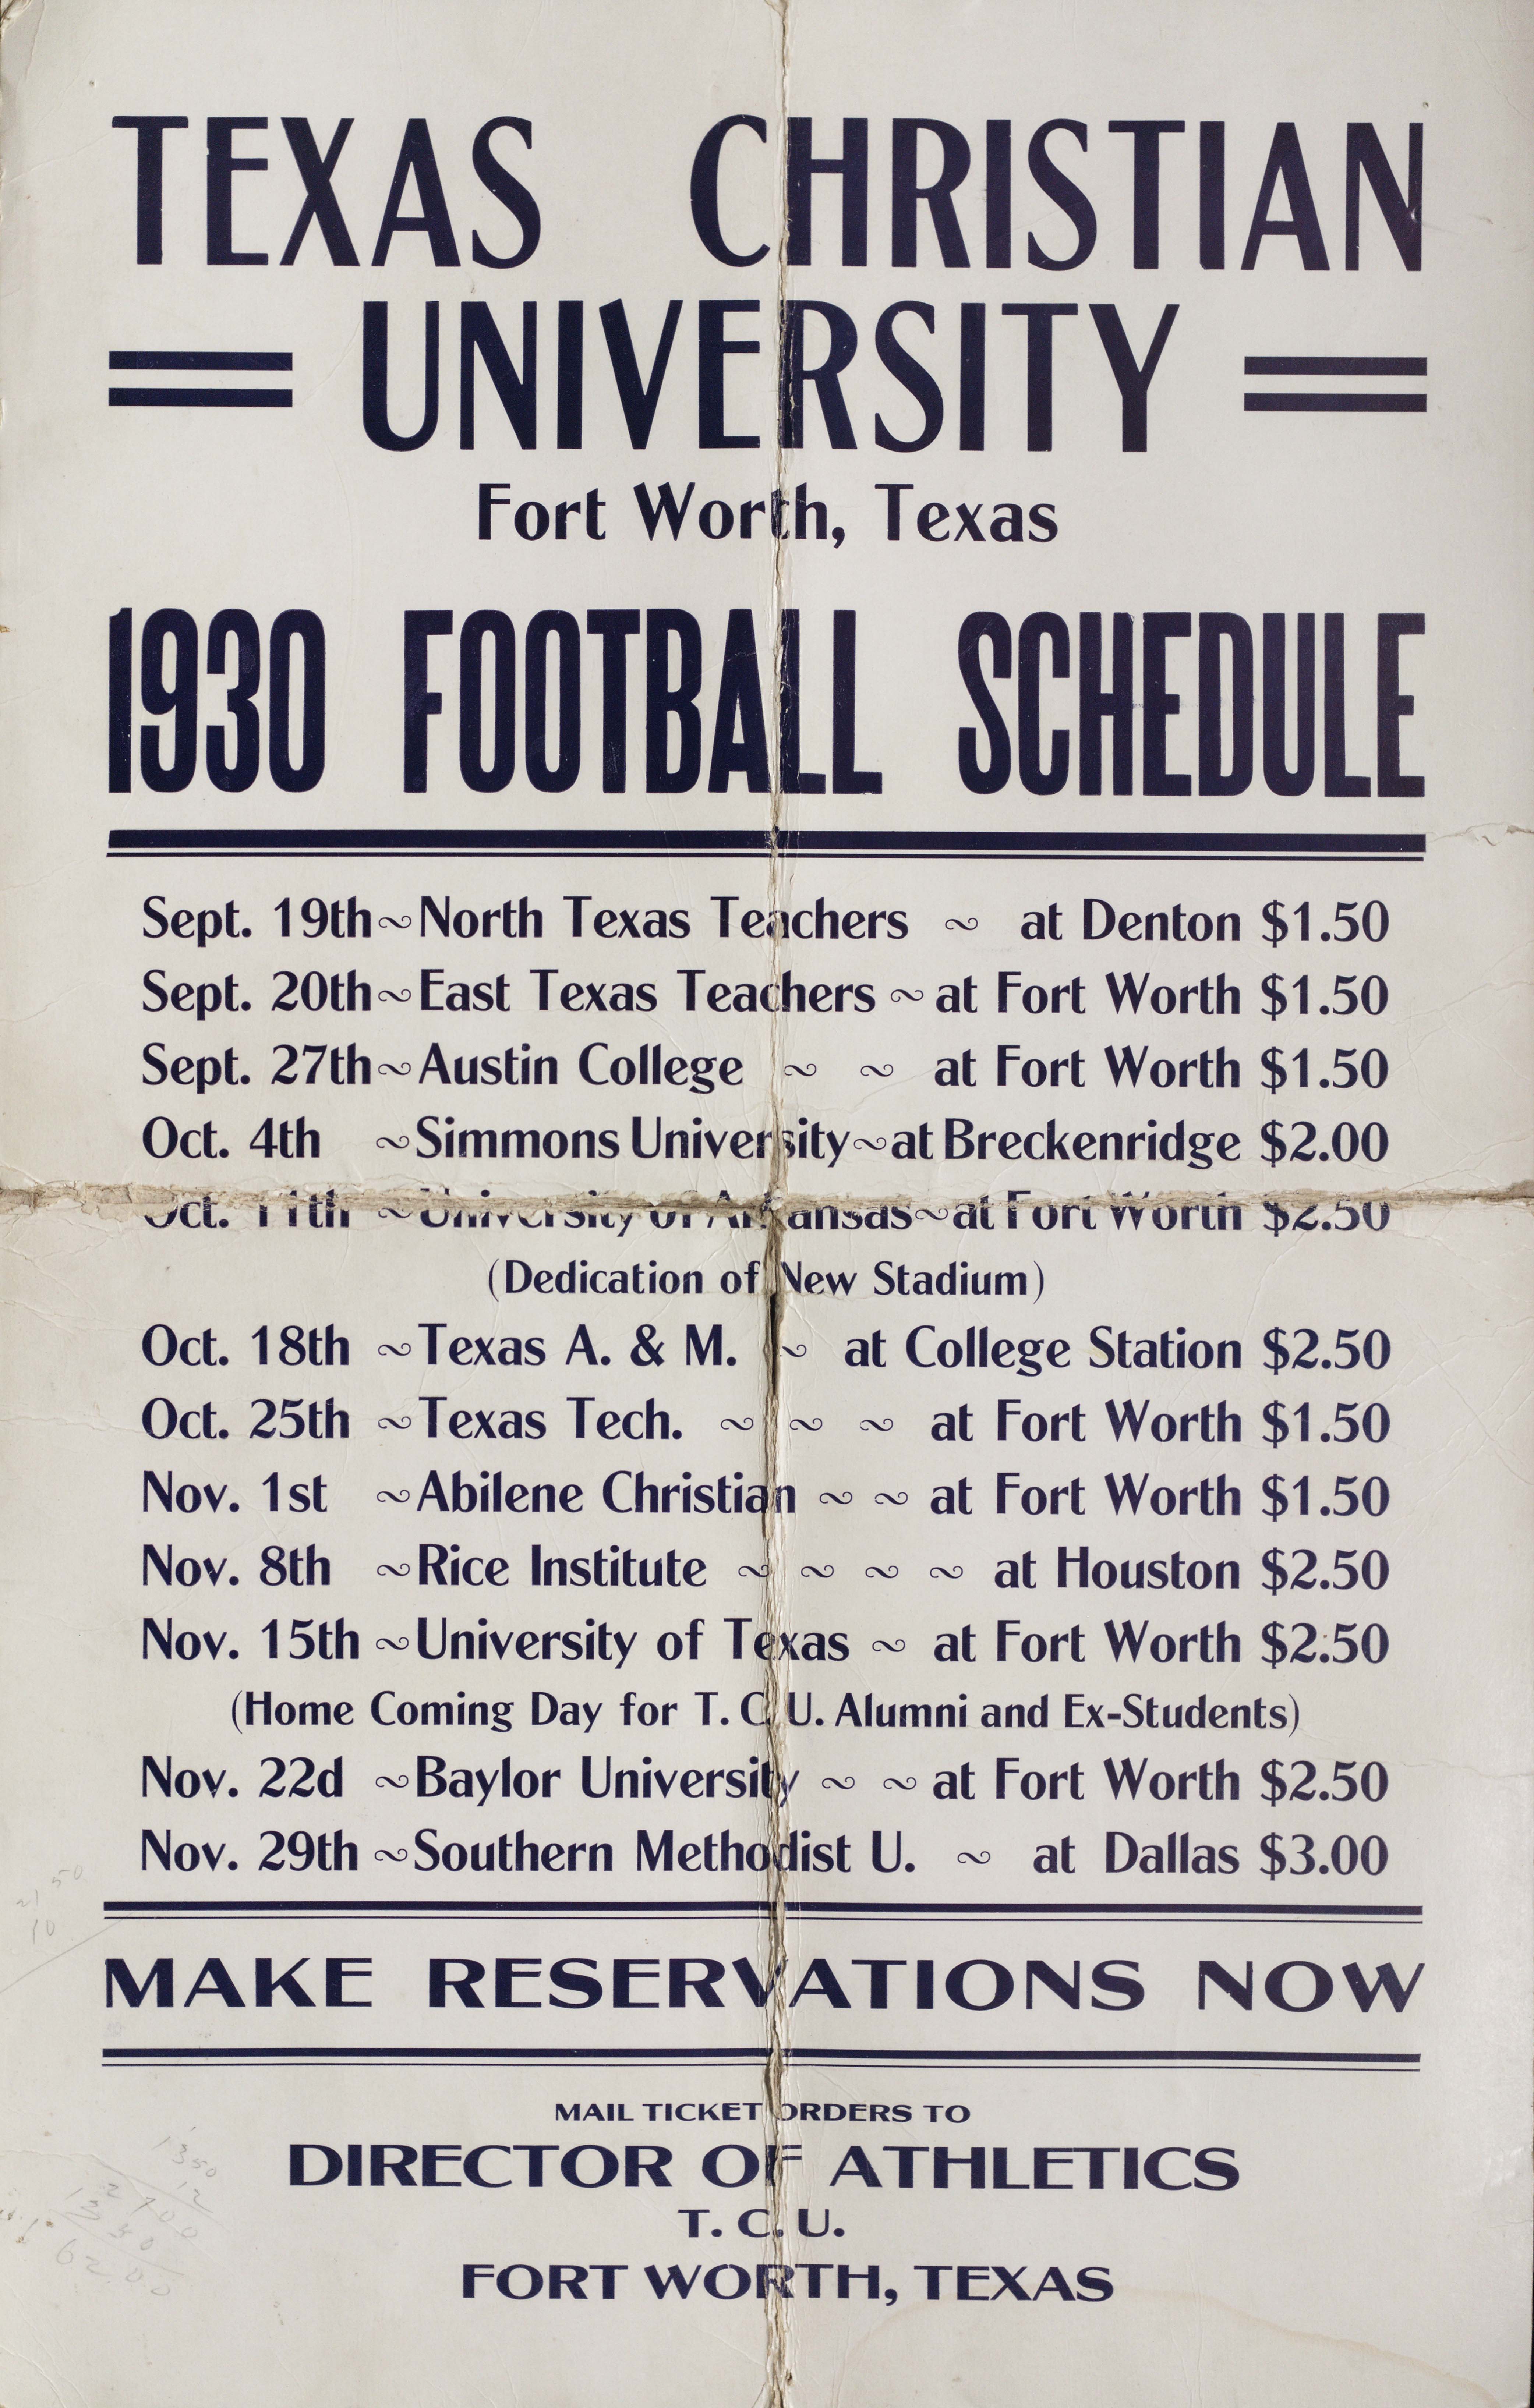 Football schedule poster